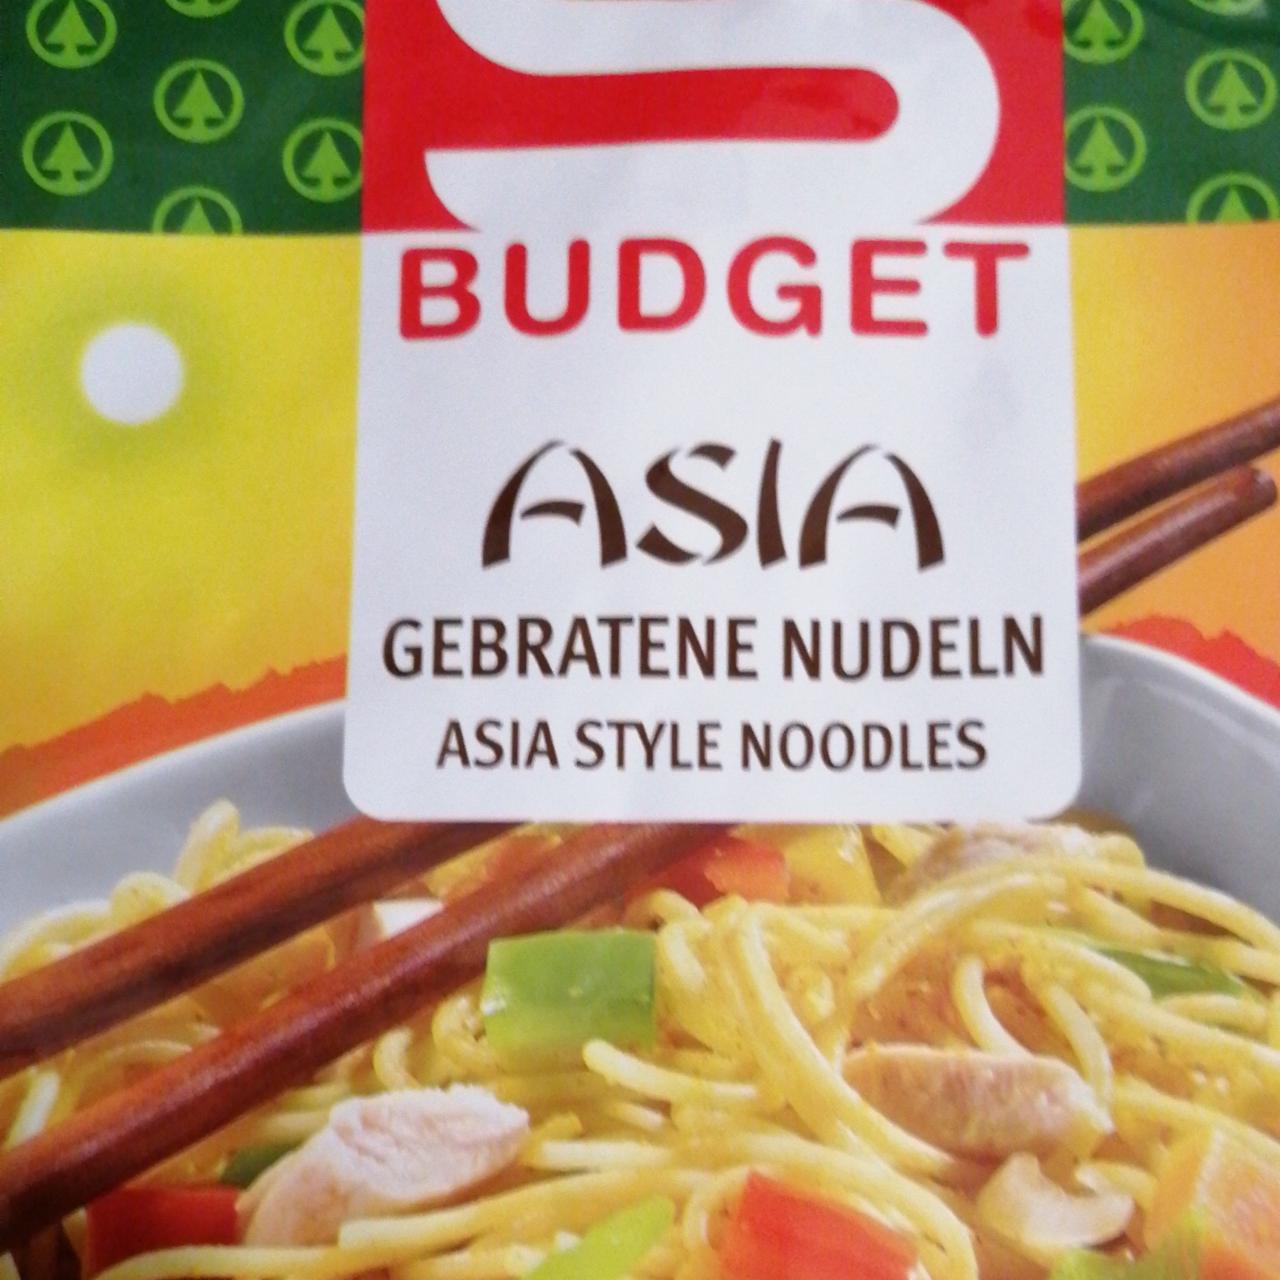 Fotografie - Asia Gebratene Nudeln S Budget